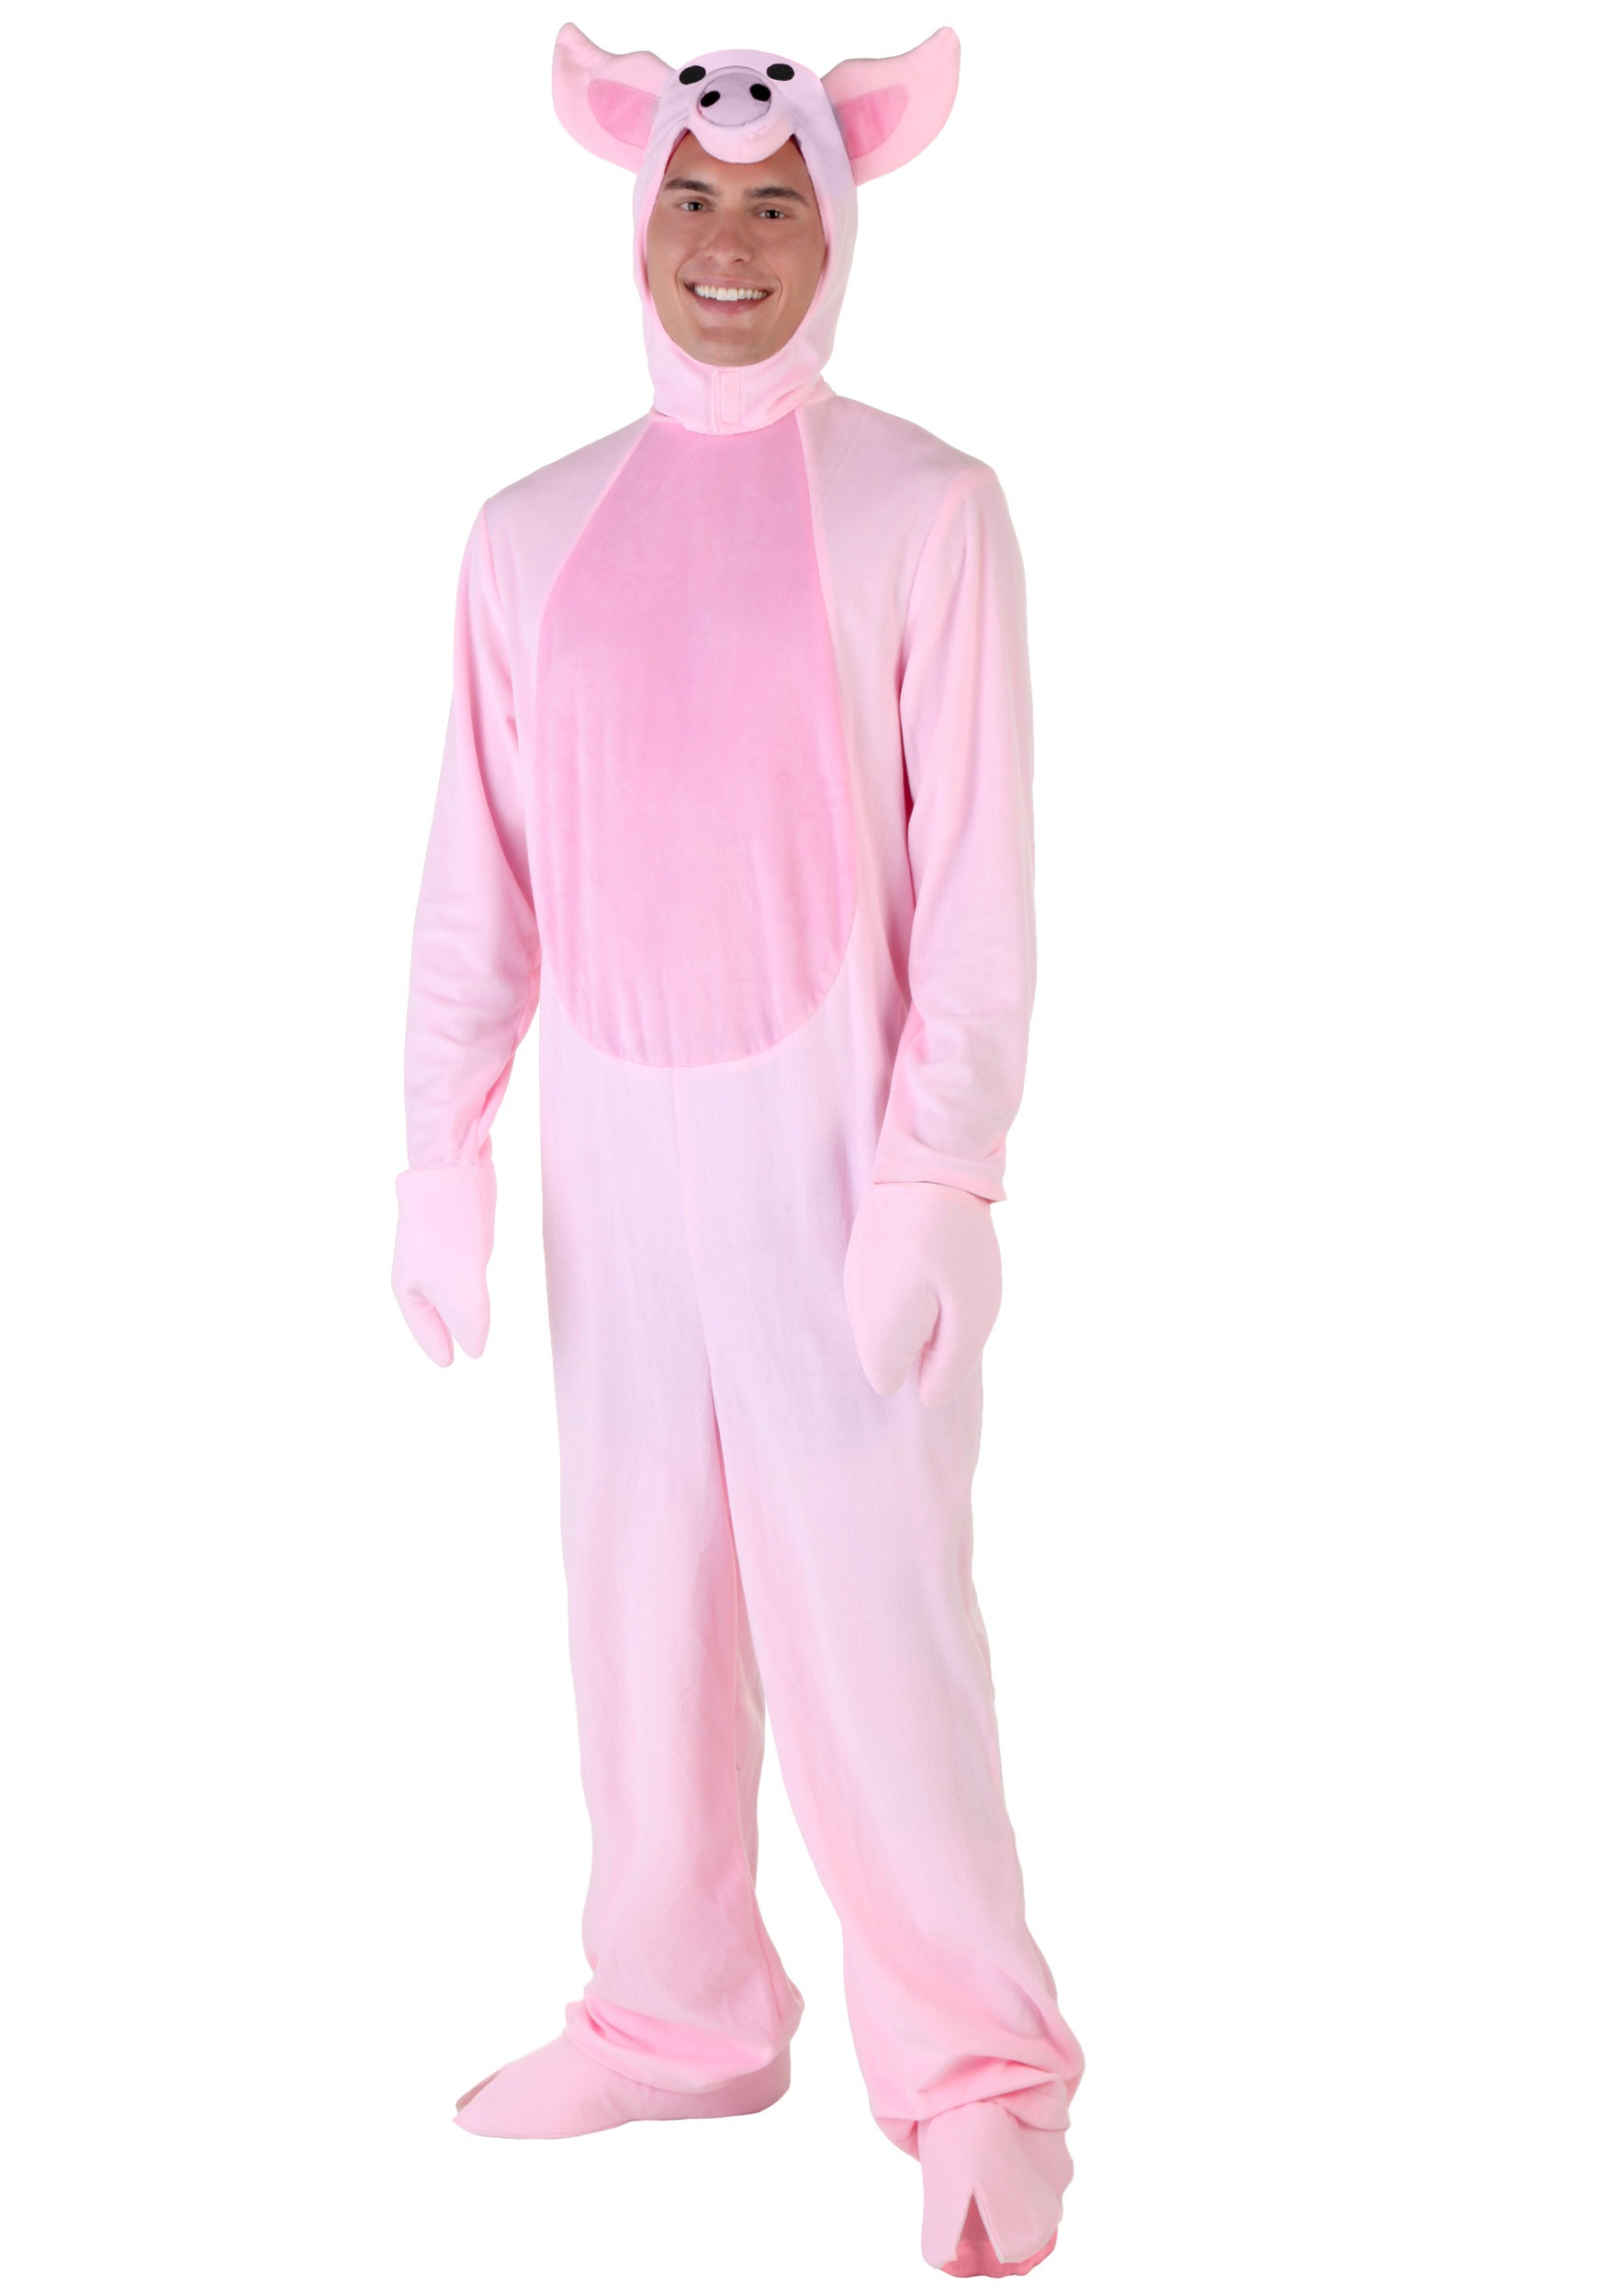 Photos - Fancy Dress FUN Costumes Pig Adult Costume Pink FUN2224AD